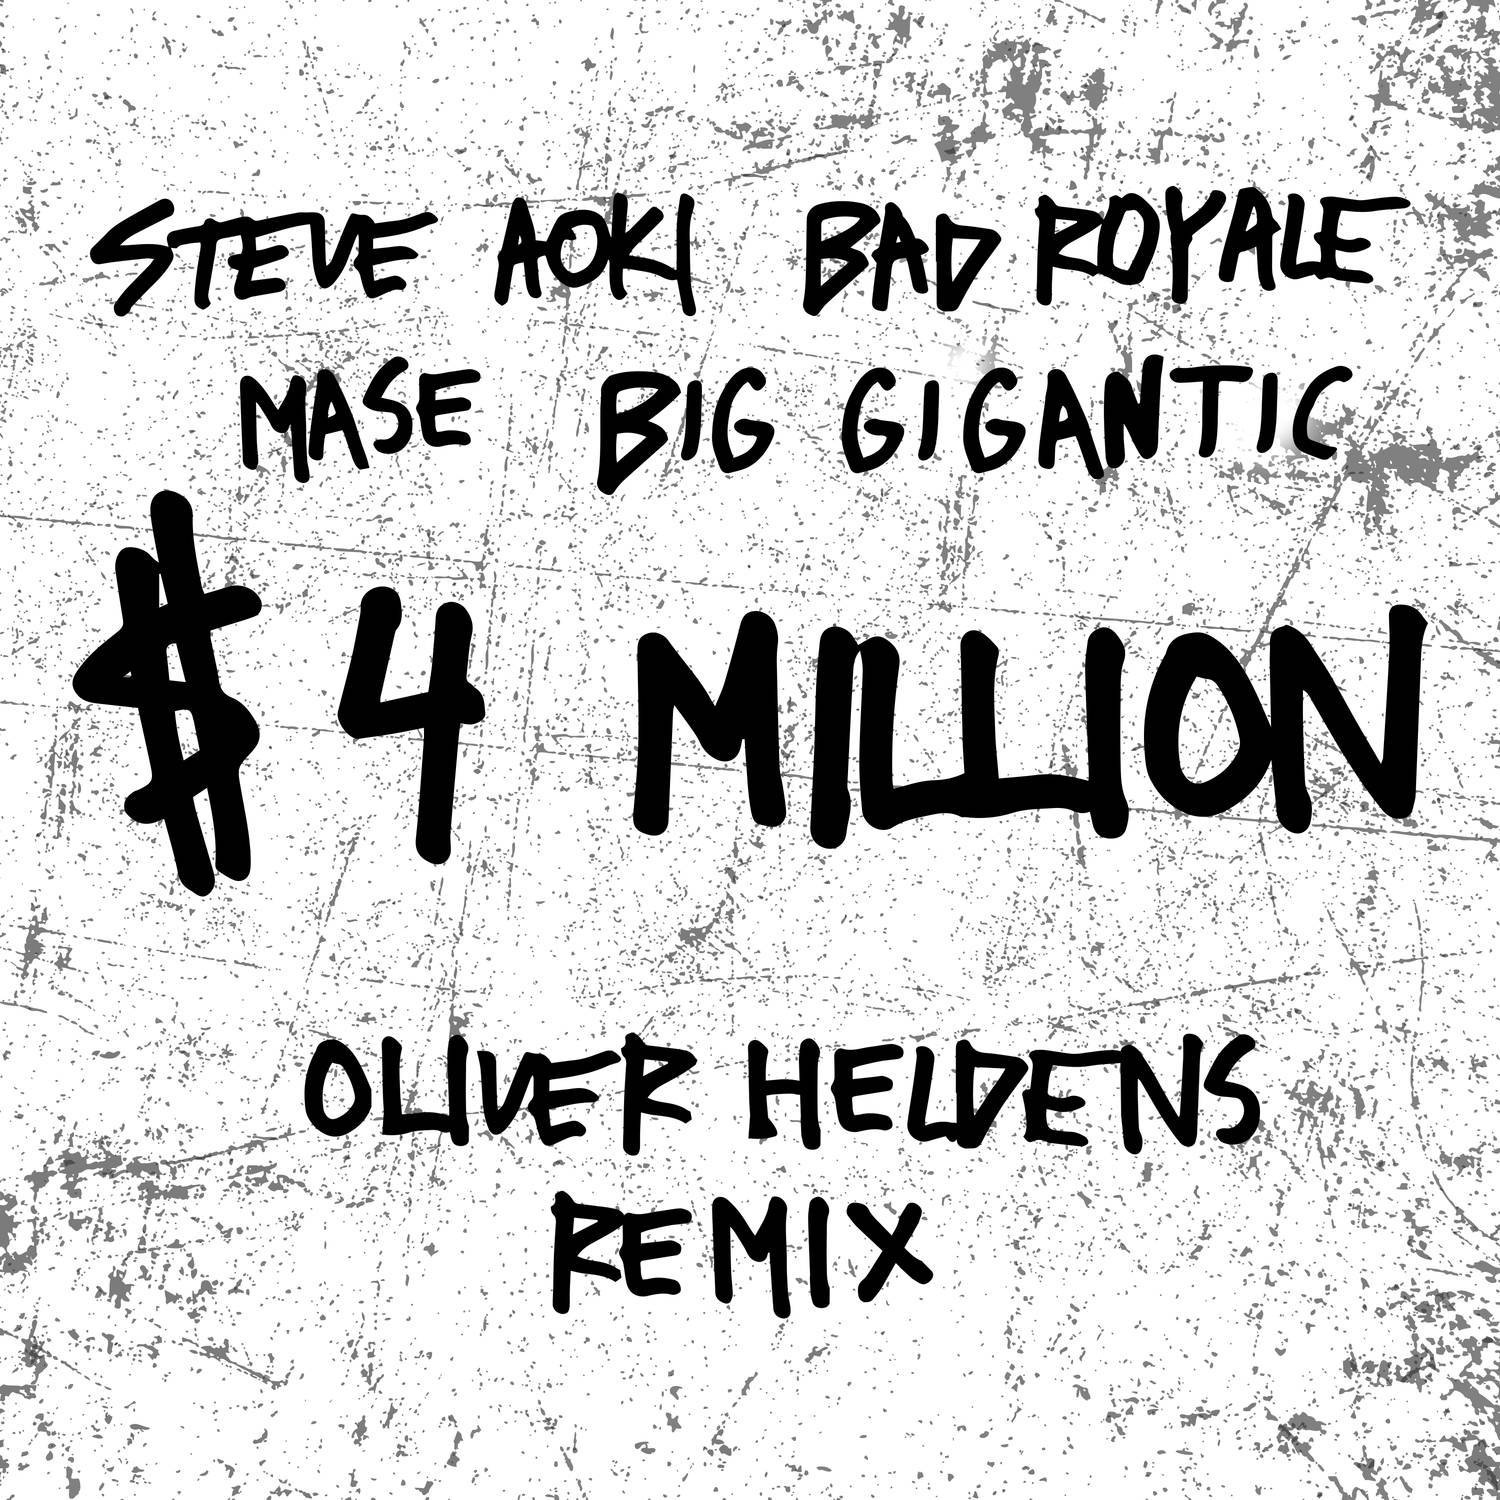 $4,000,000 (Oliver Heldens Remix)